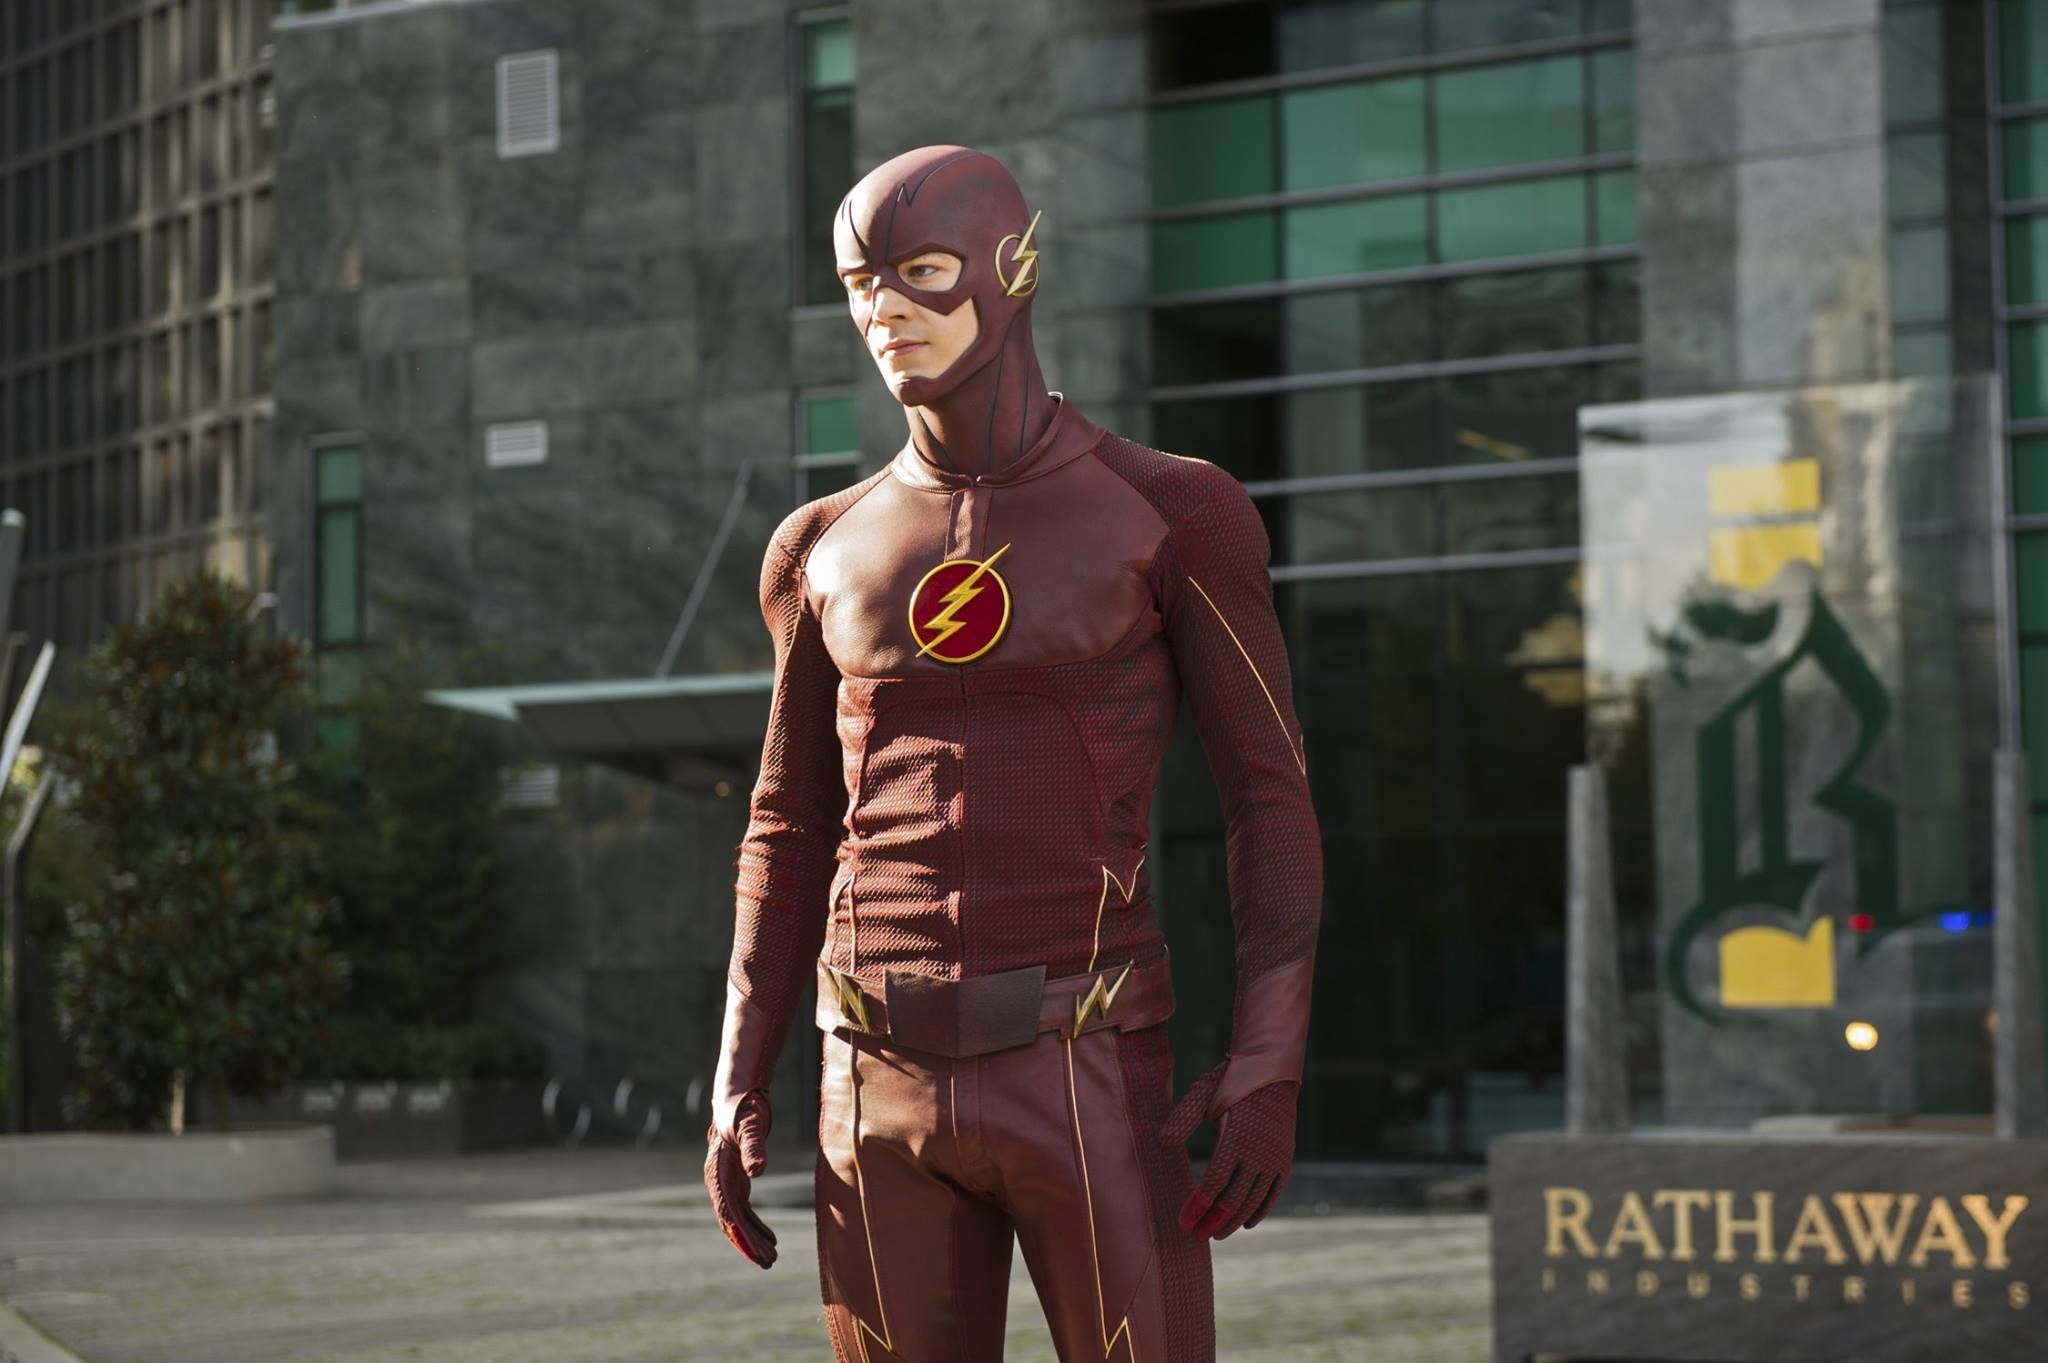 The Flash's Zoom: Tony Todd to Play DC Comics Villain in Season 2